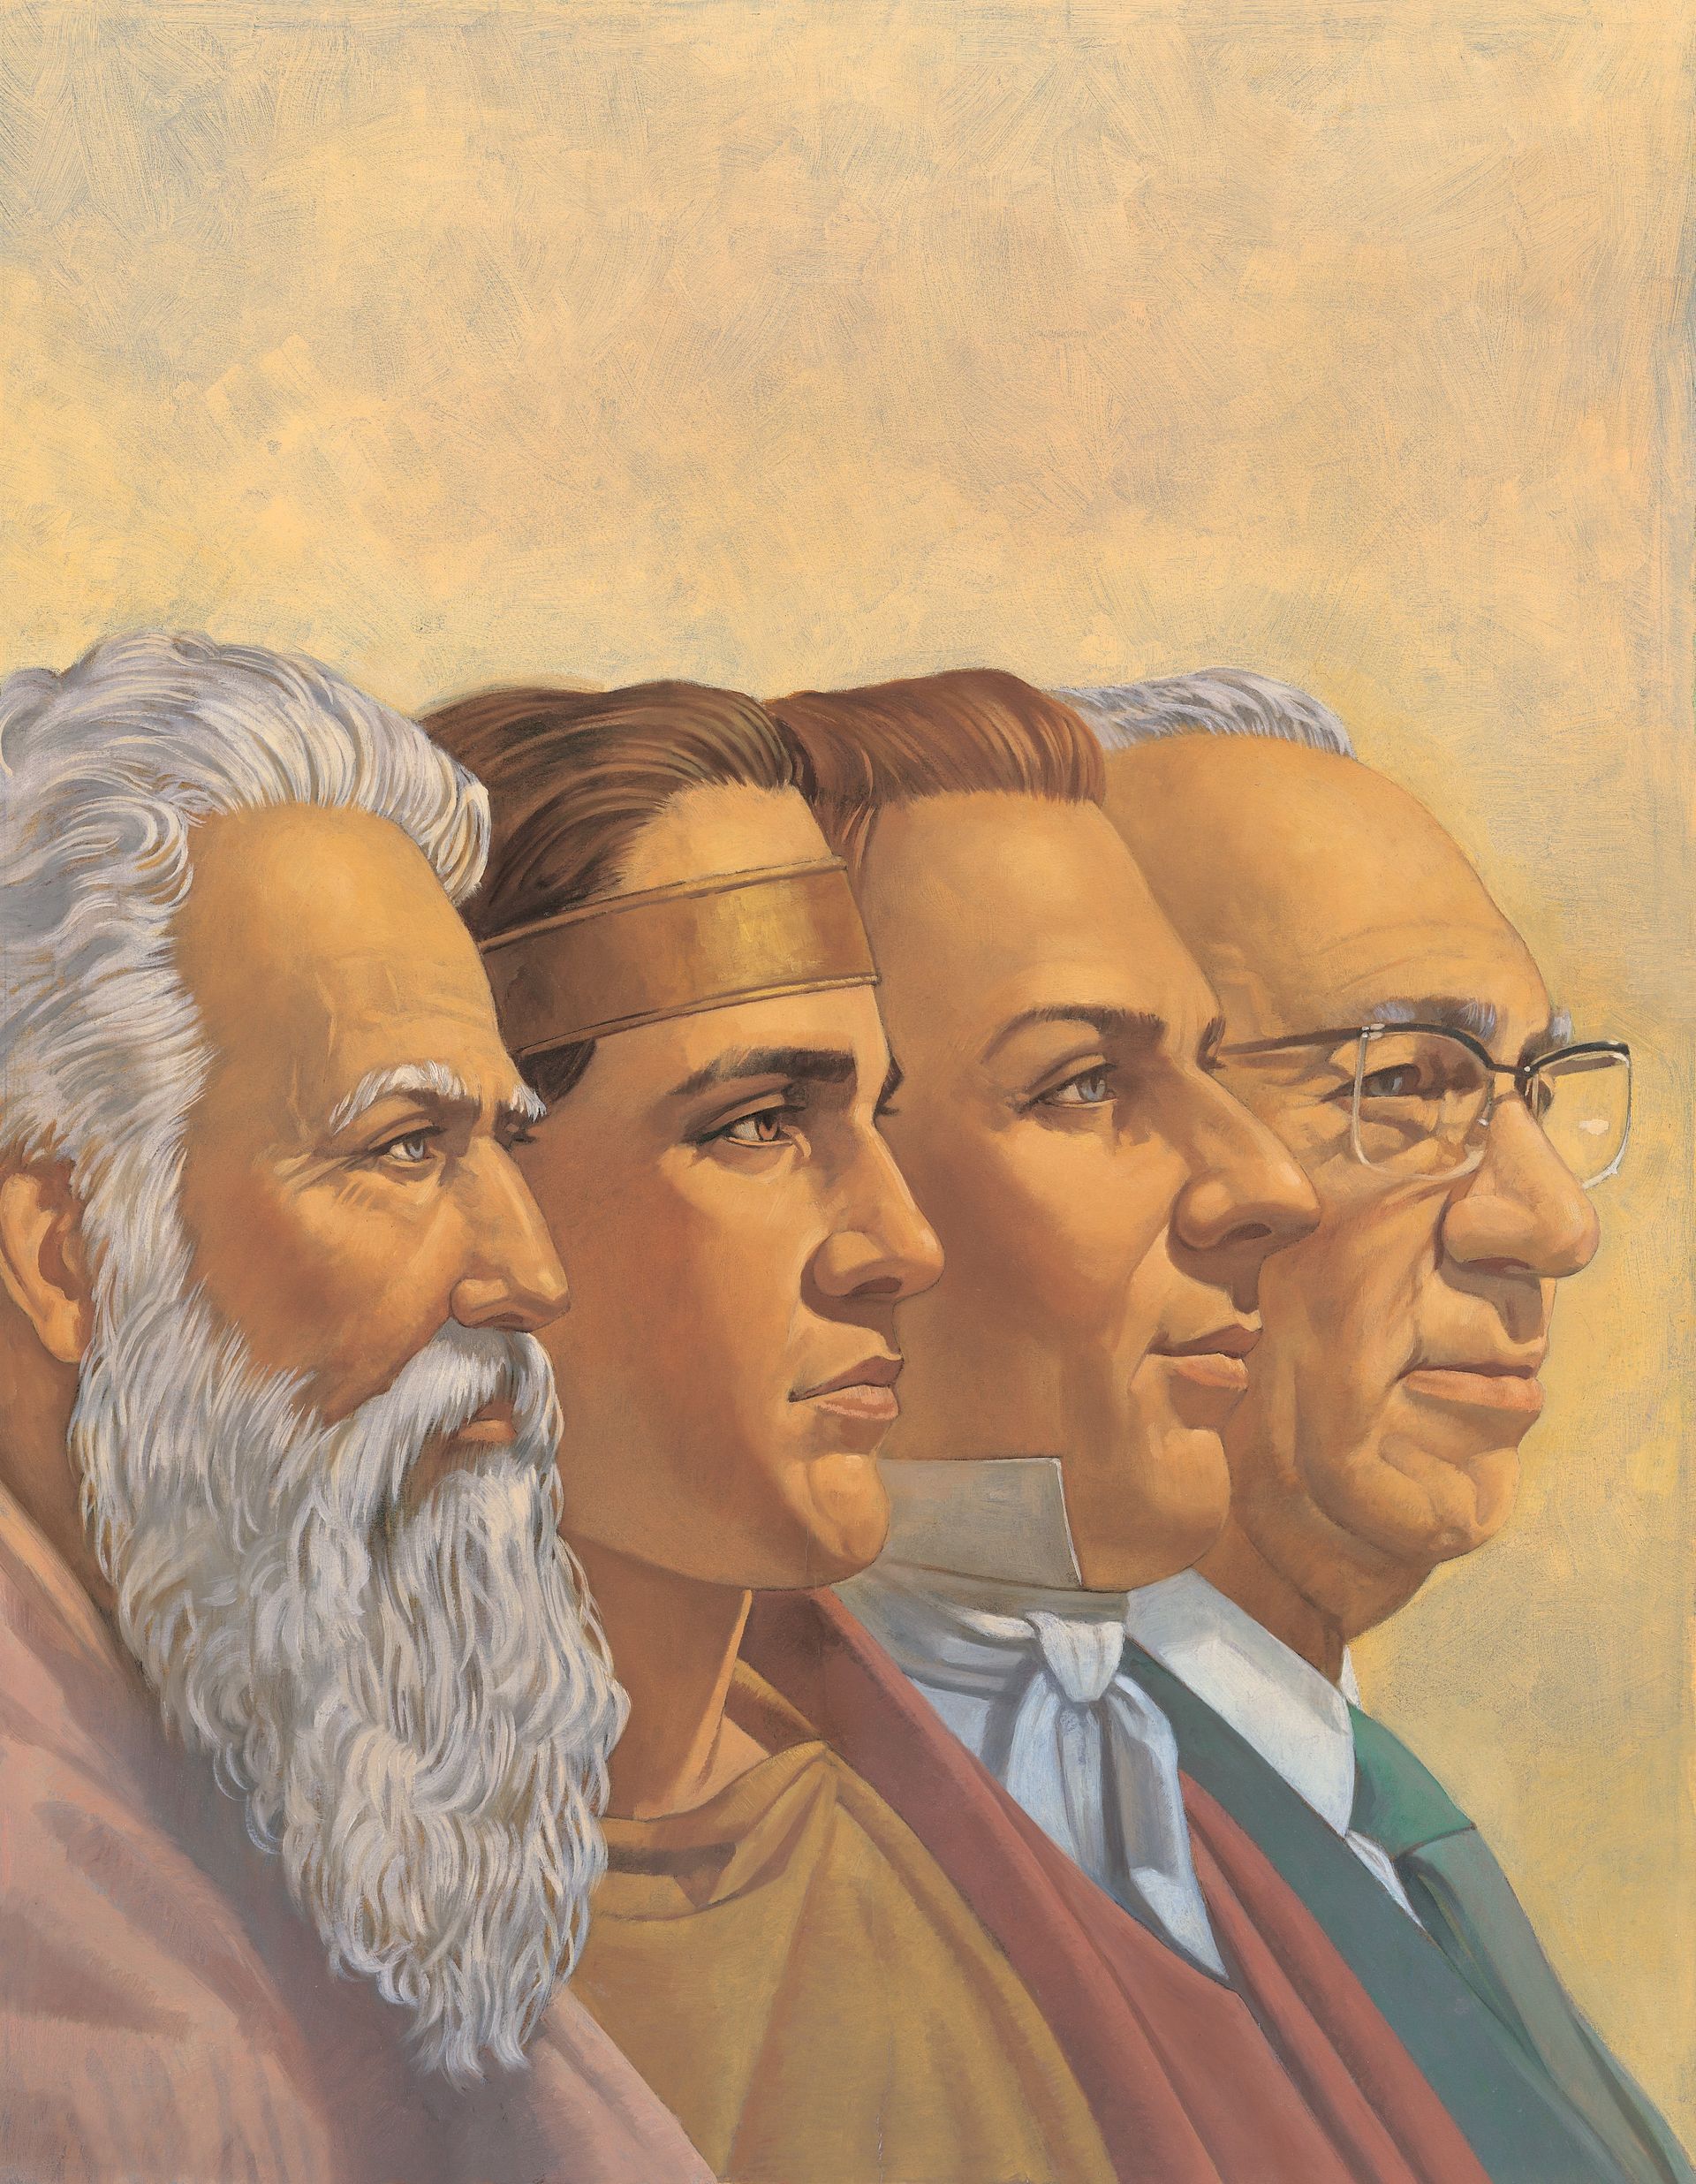 Four Prophets, by Robert T. Barrett